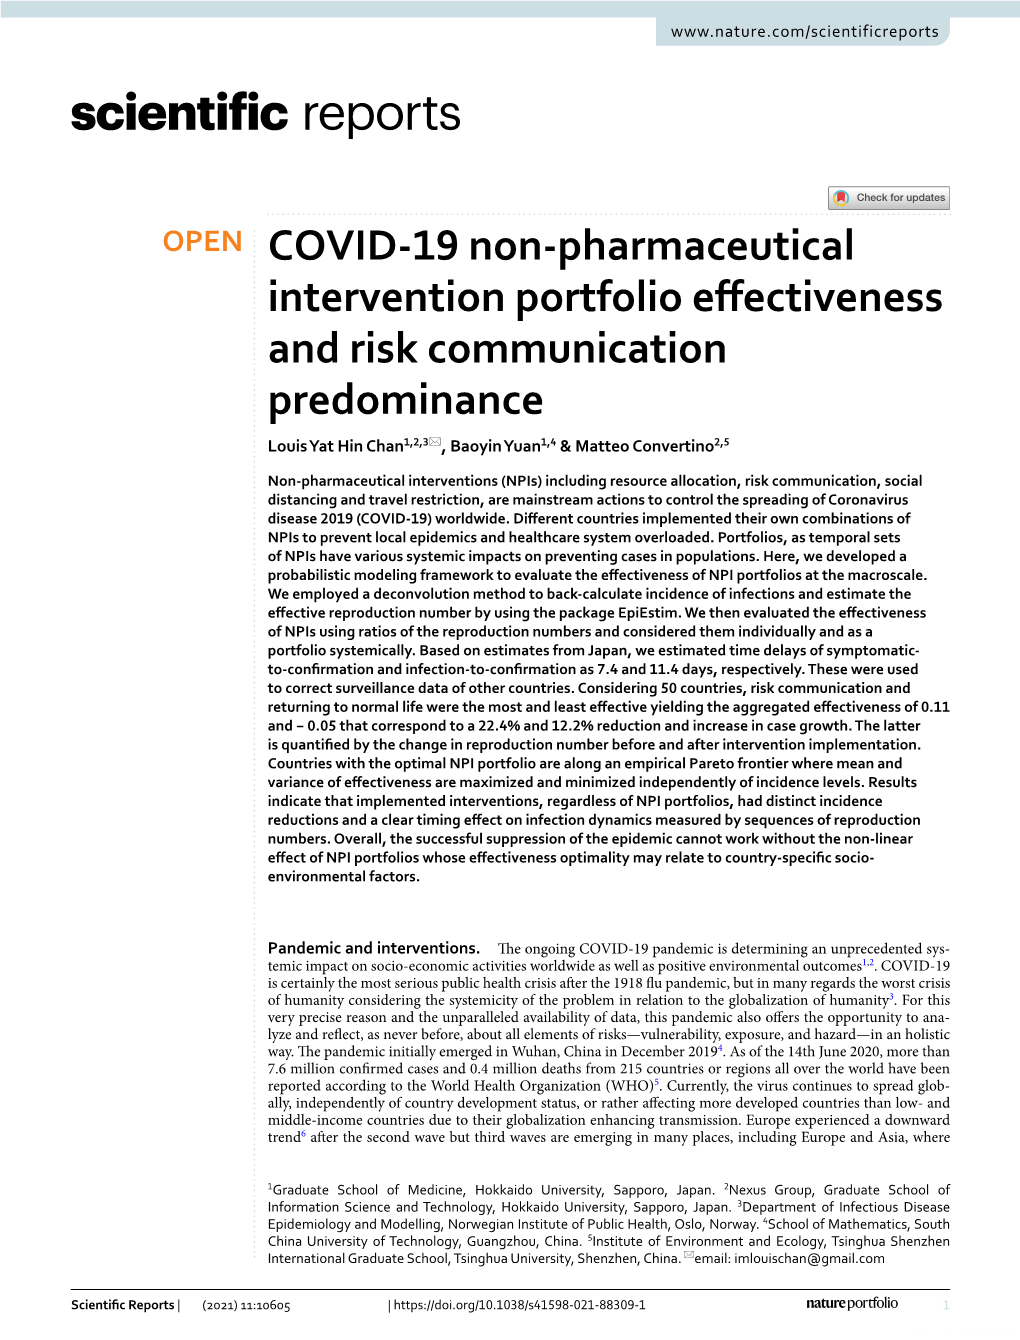 COVID-19 Non-Pharmaceutical Intervention Portfolio Effectiveness and Risk Communication Predominance